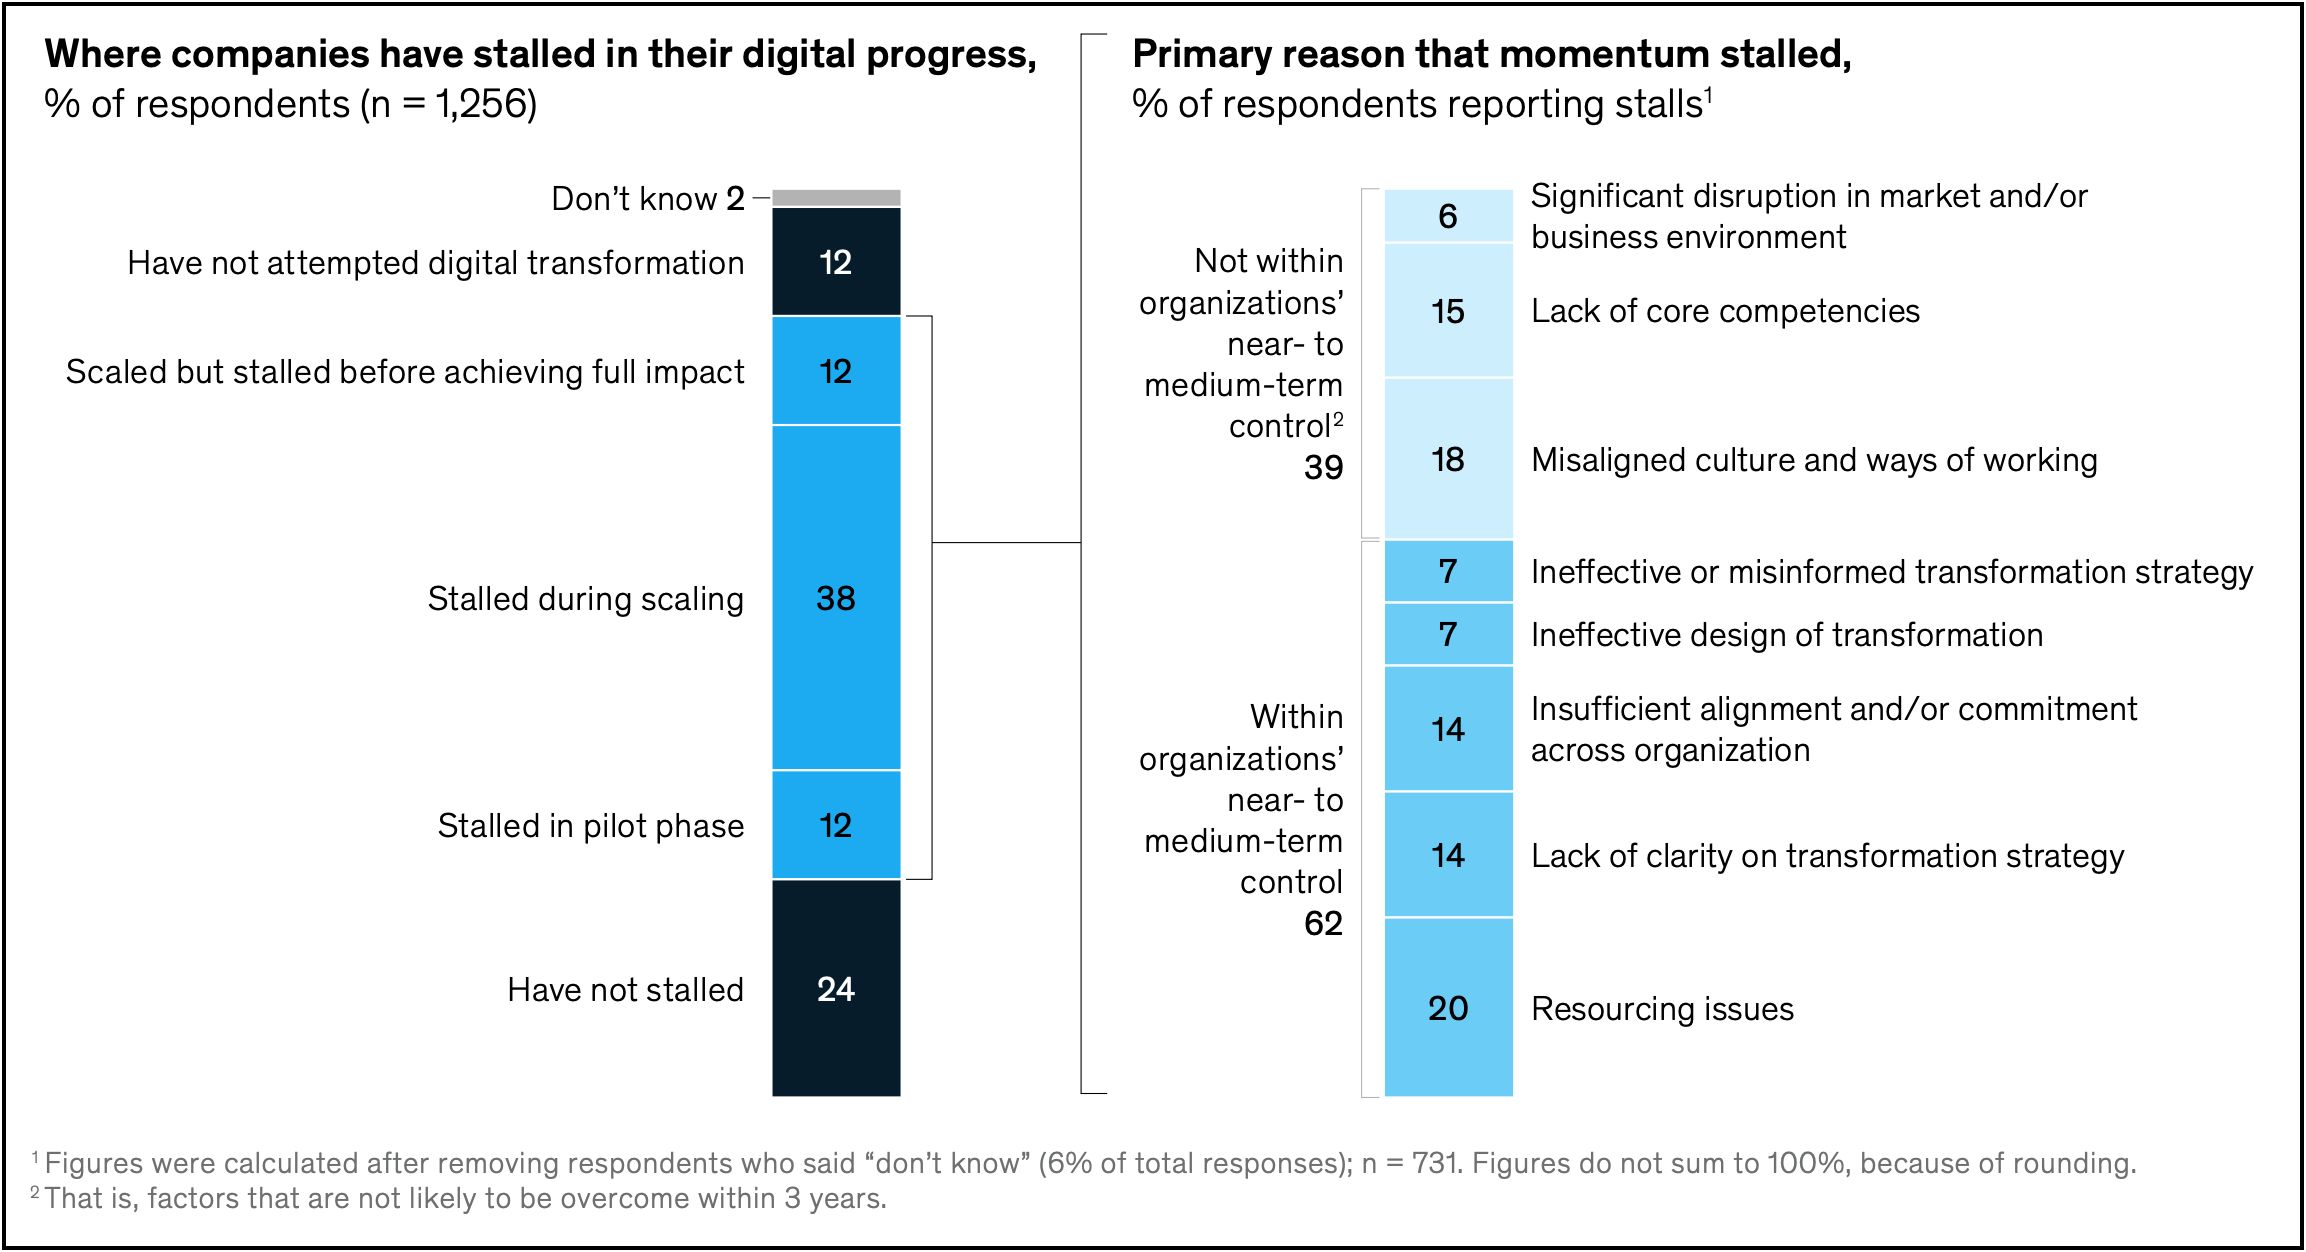 "How to restart your stalled digital transformation", McKinsey Digital, March 2020